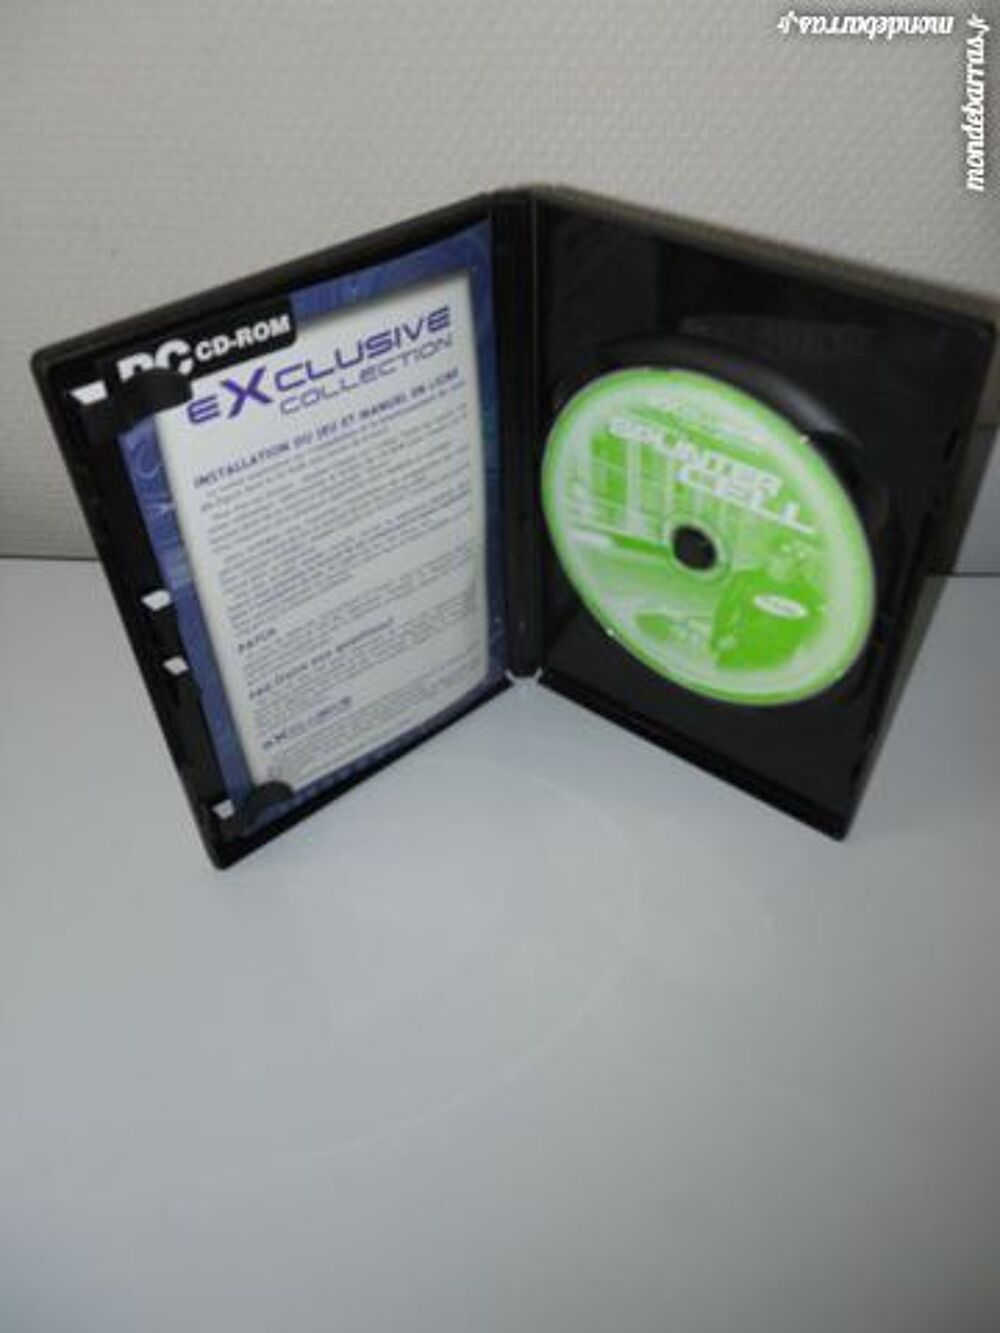 PC CD-ROM Tom CLANCY'S SPLINTER CELL 12 ans et + Matriel informatique